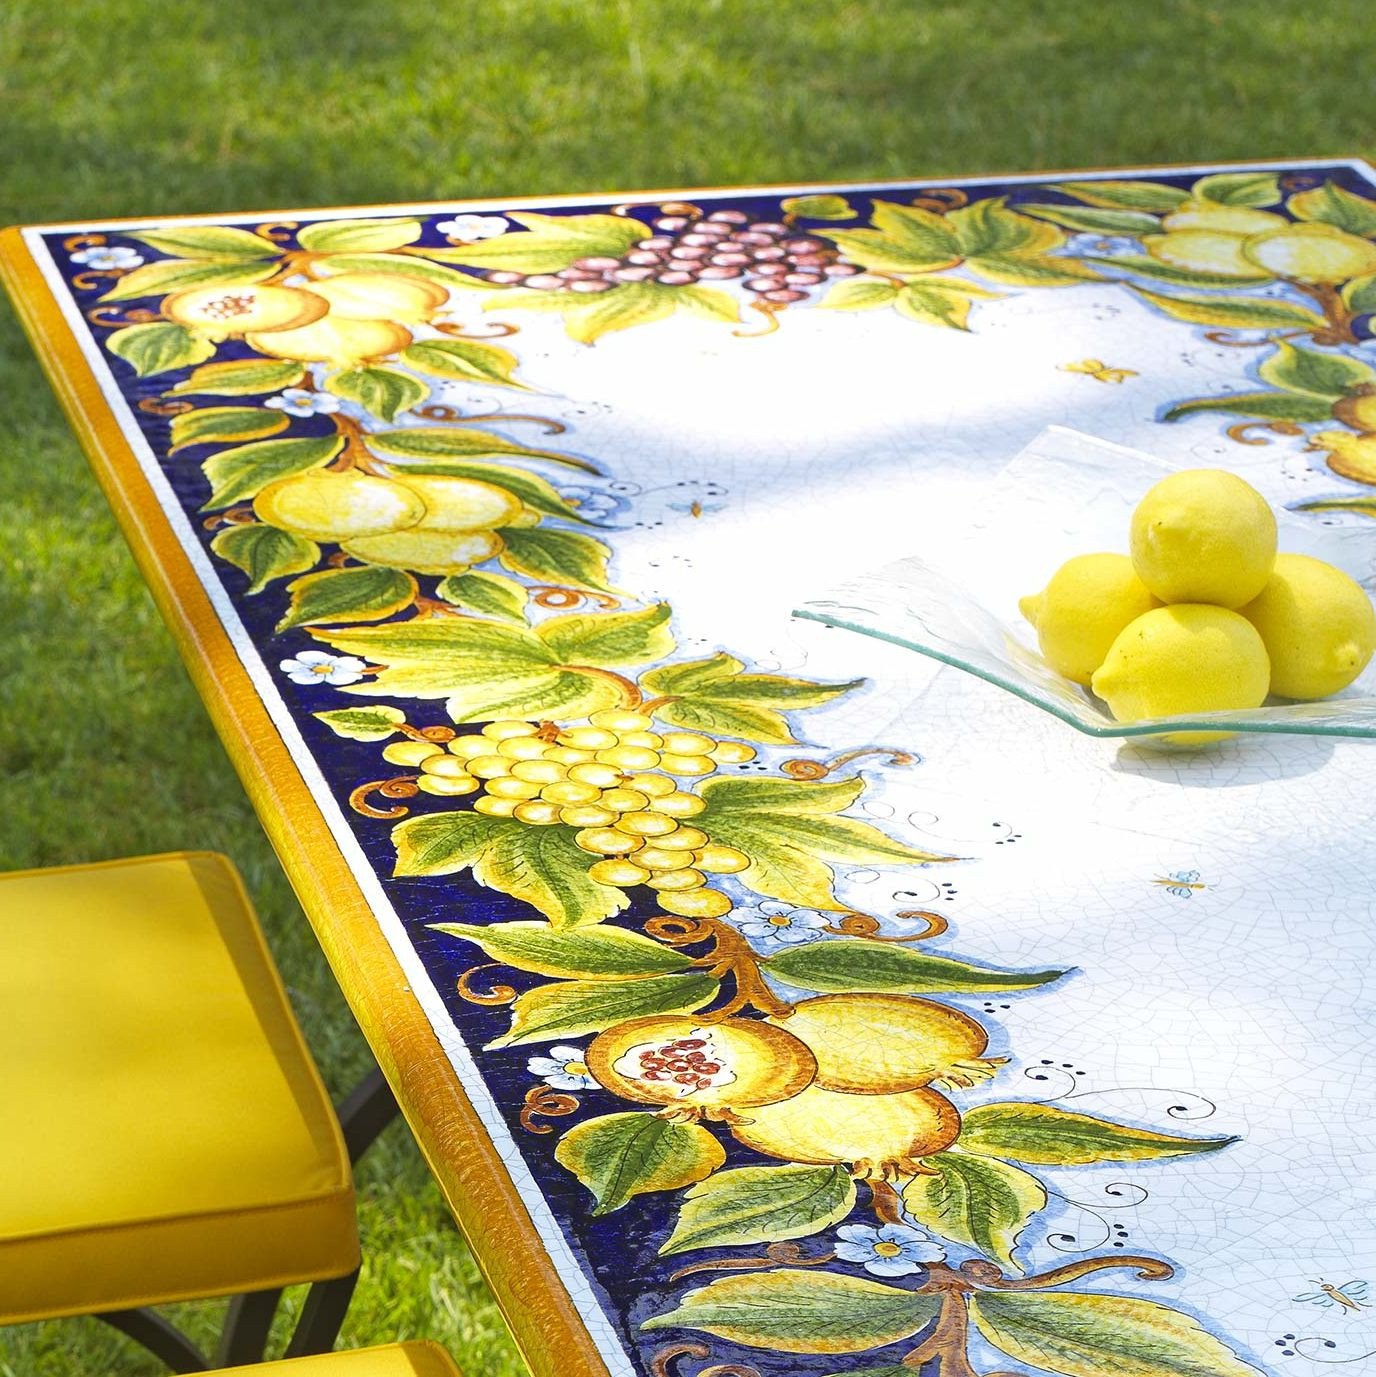 CERAMIC STONE TABLE + IRON BASE: PESCARA Design - Hand Painted in Deruta, Italy. - Artistica.com